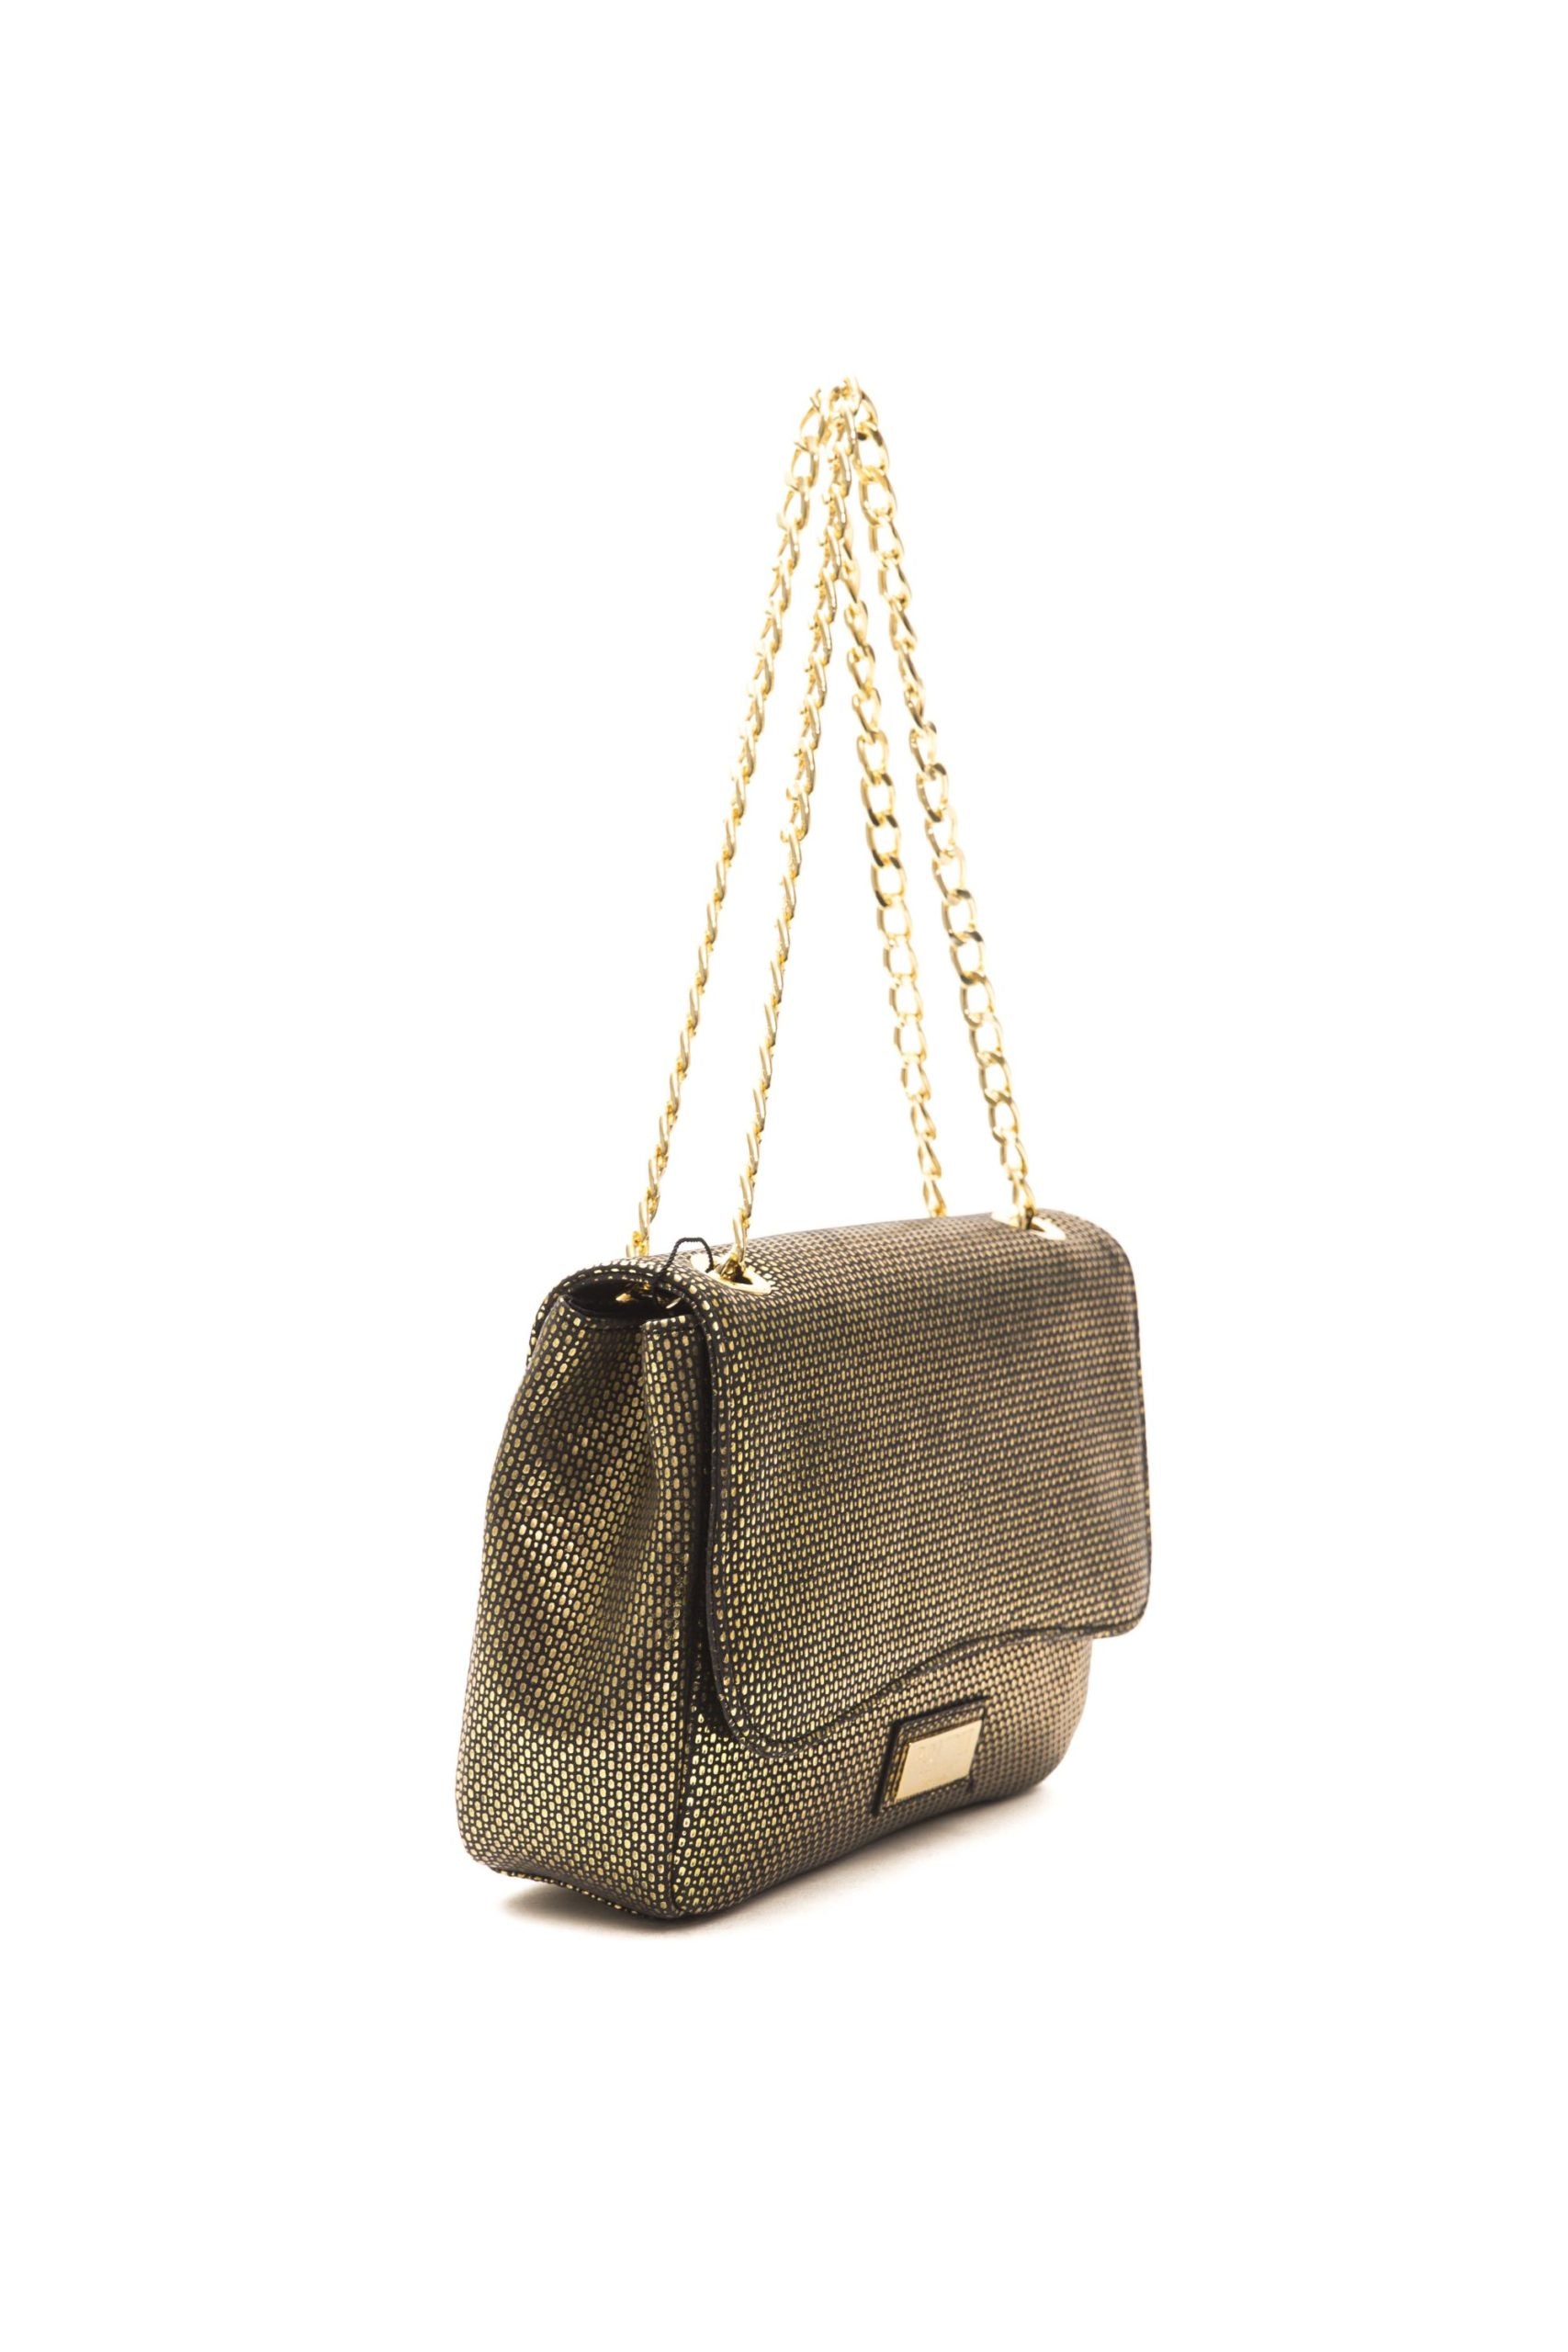 Buy Chic Elegance Leather Crossbody Bag by Pompei Donatella